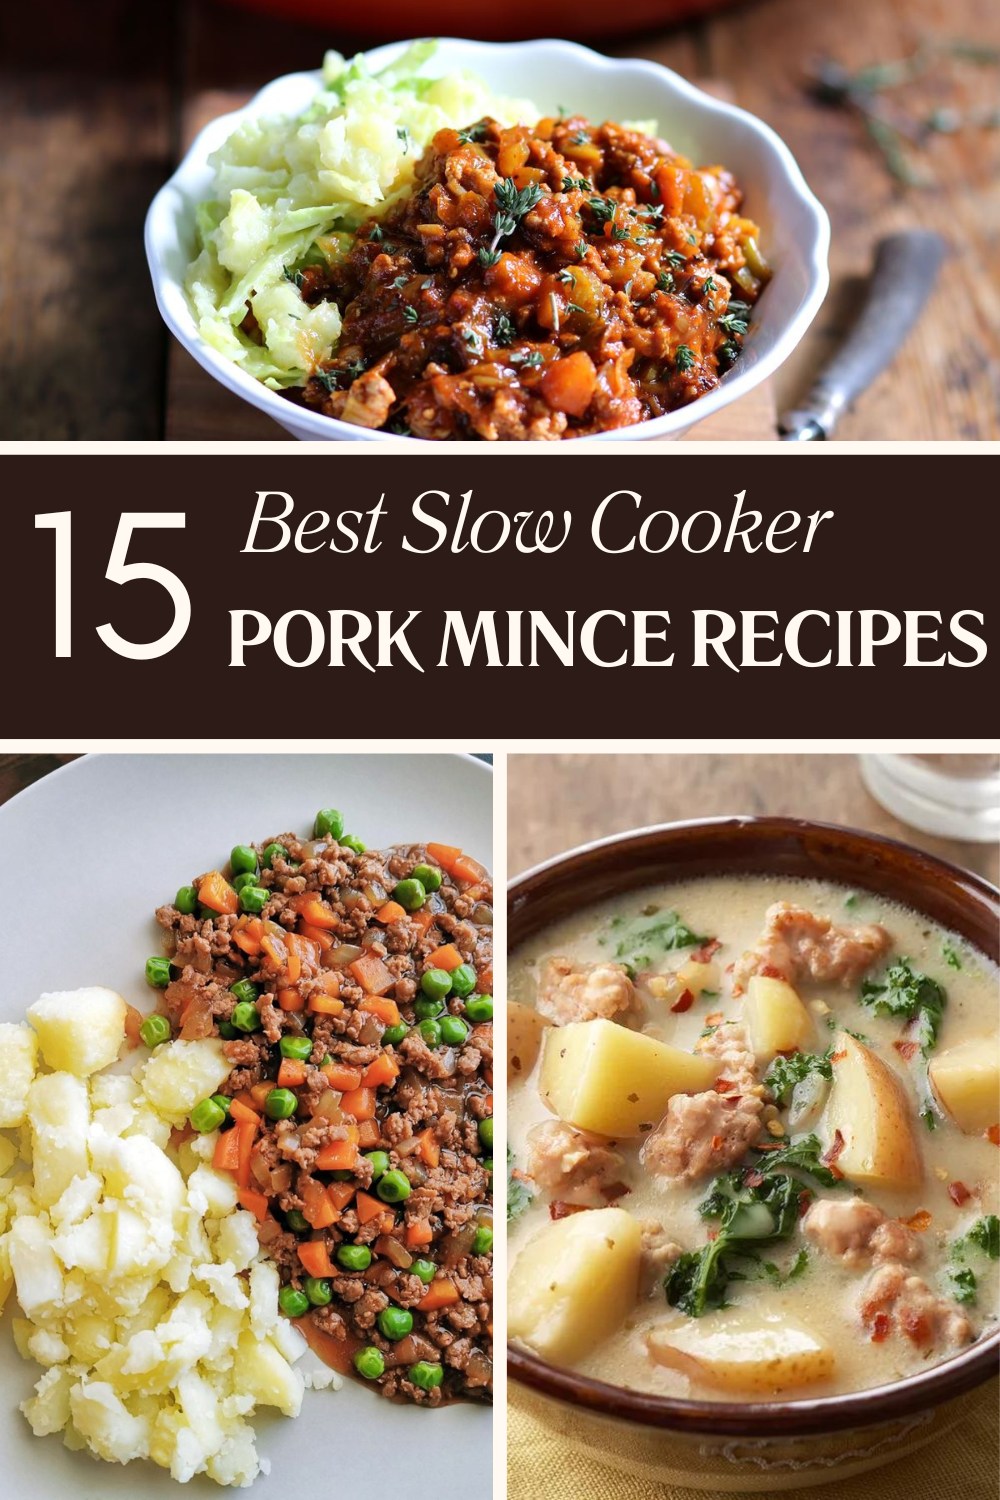 15 Best Pork Mince Recipes in Slow Cooker